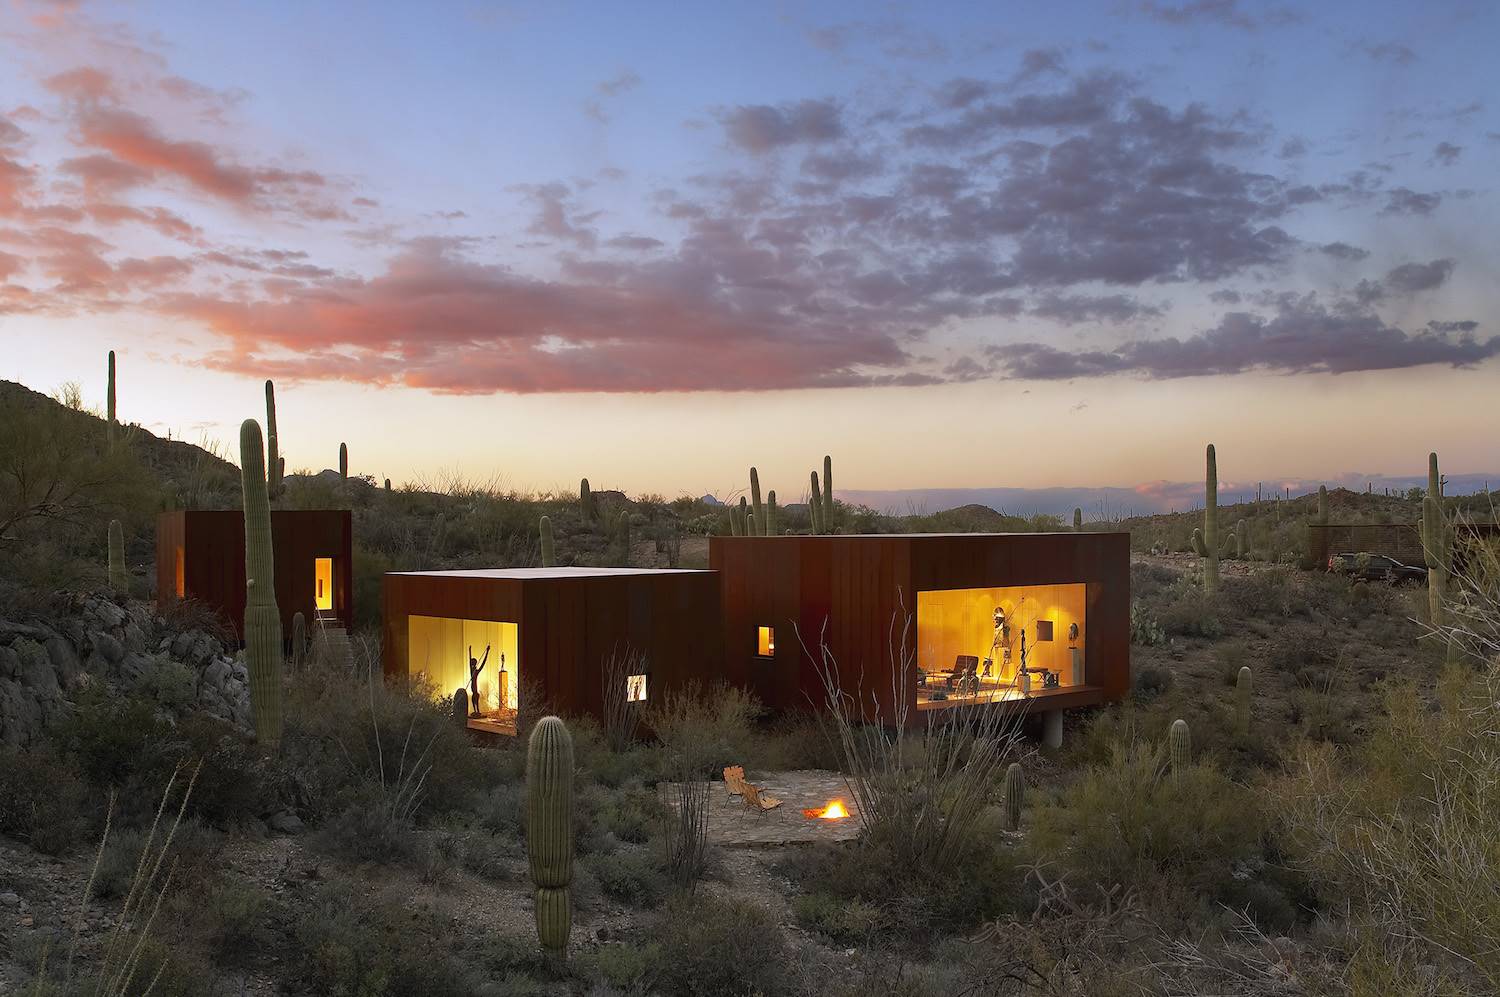 Casa de los nómadas del desierto, Rick Joy Architects, Tucson, Arizona (2005)